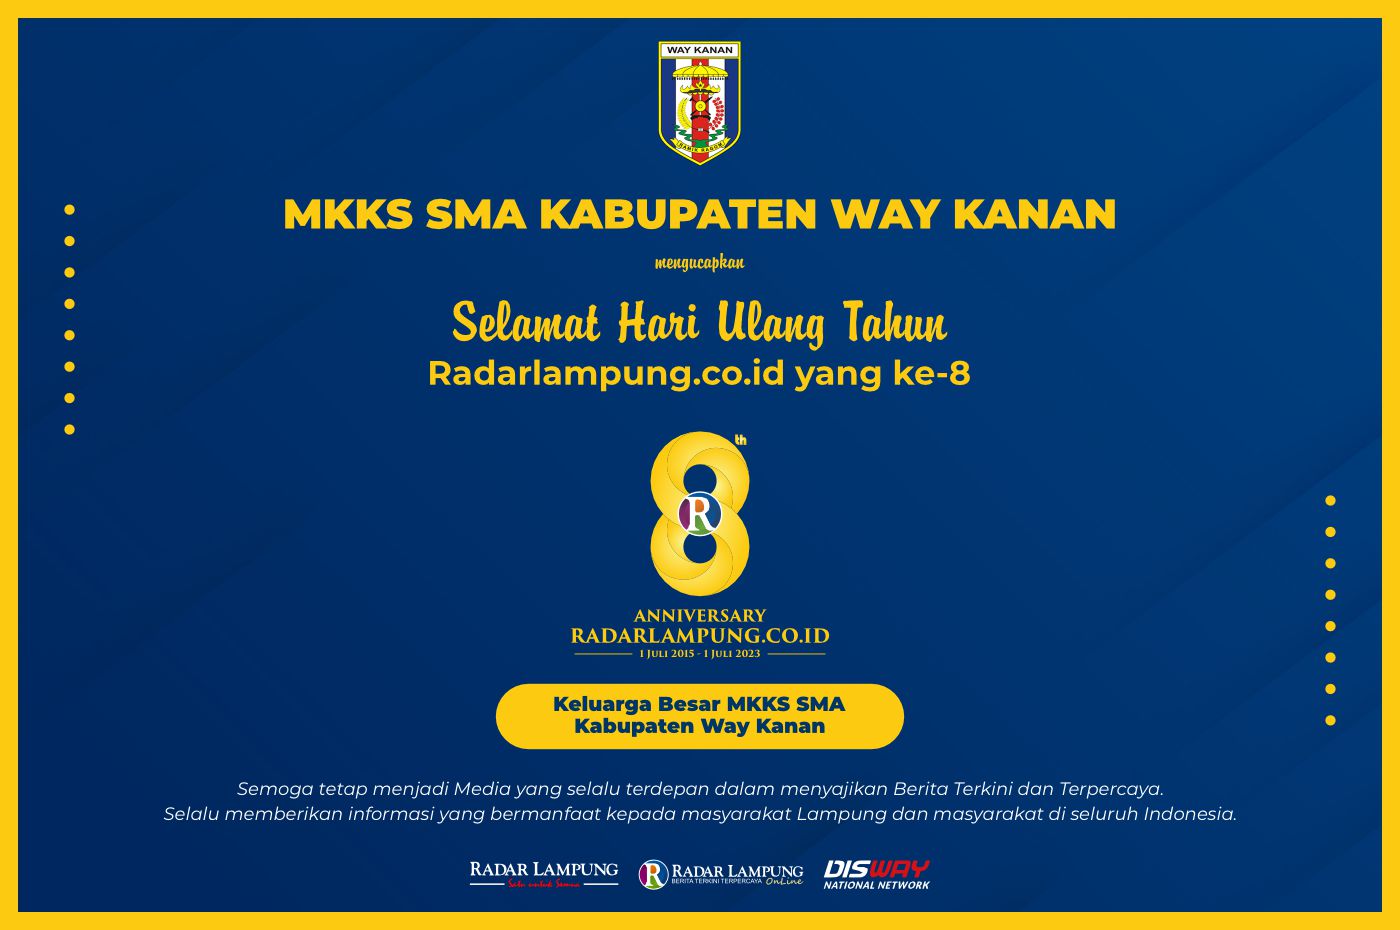 MKKS Kabupaten Way Kanan: Selamat Ulang Tahun ke-8 Radar Lampung Online